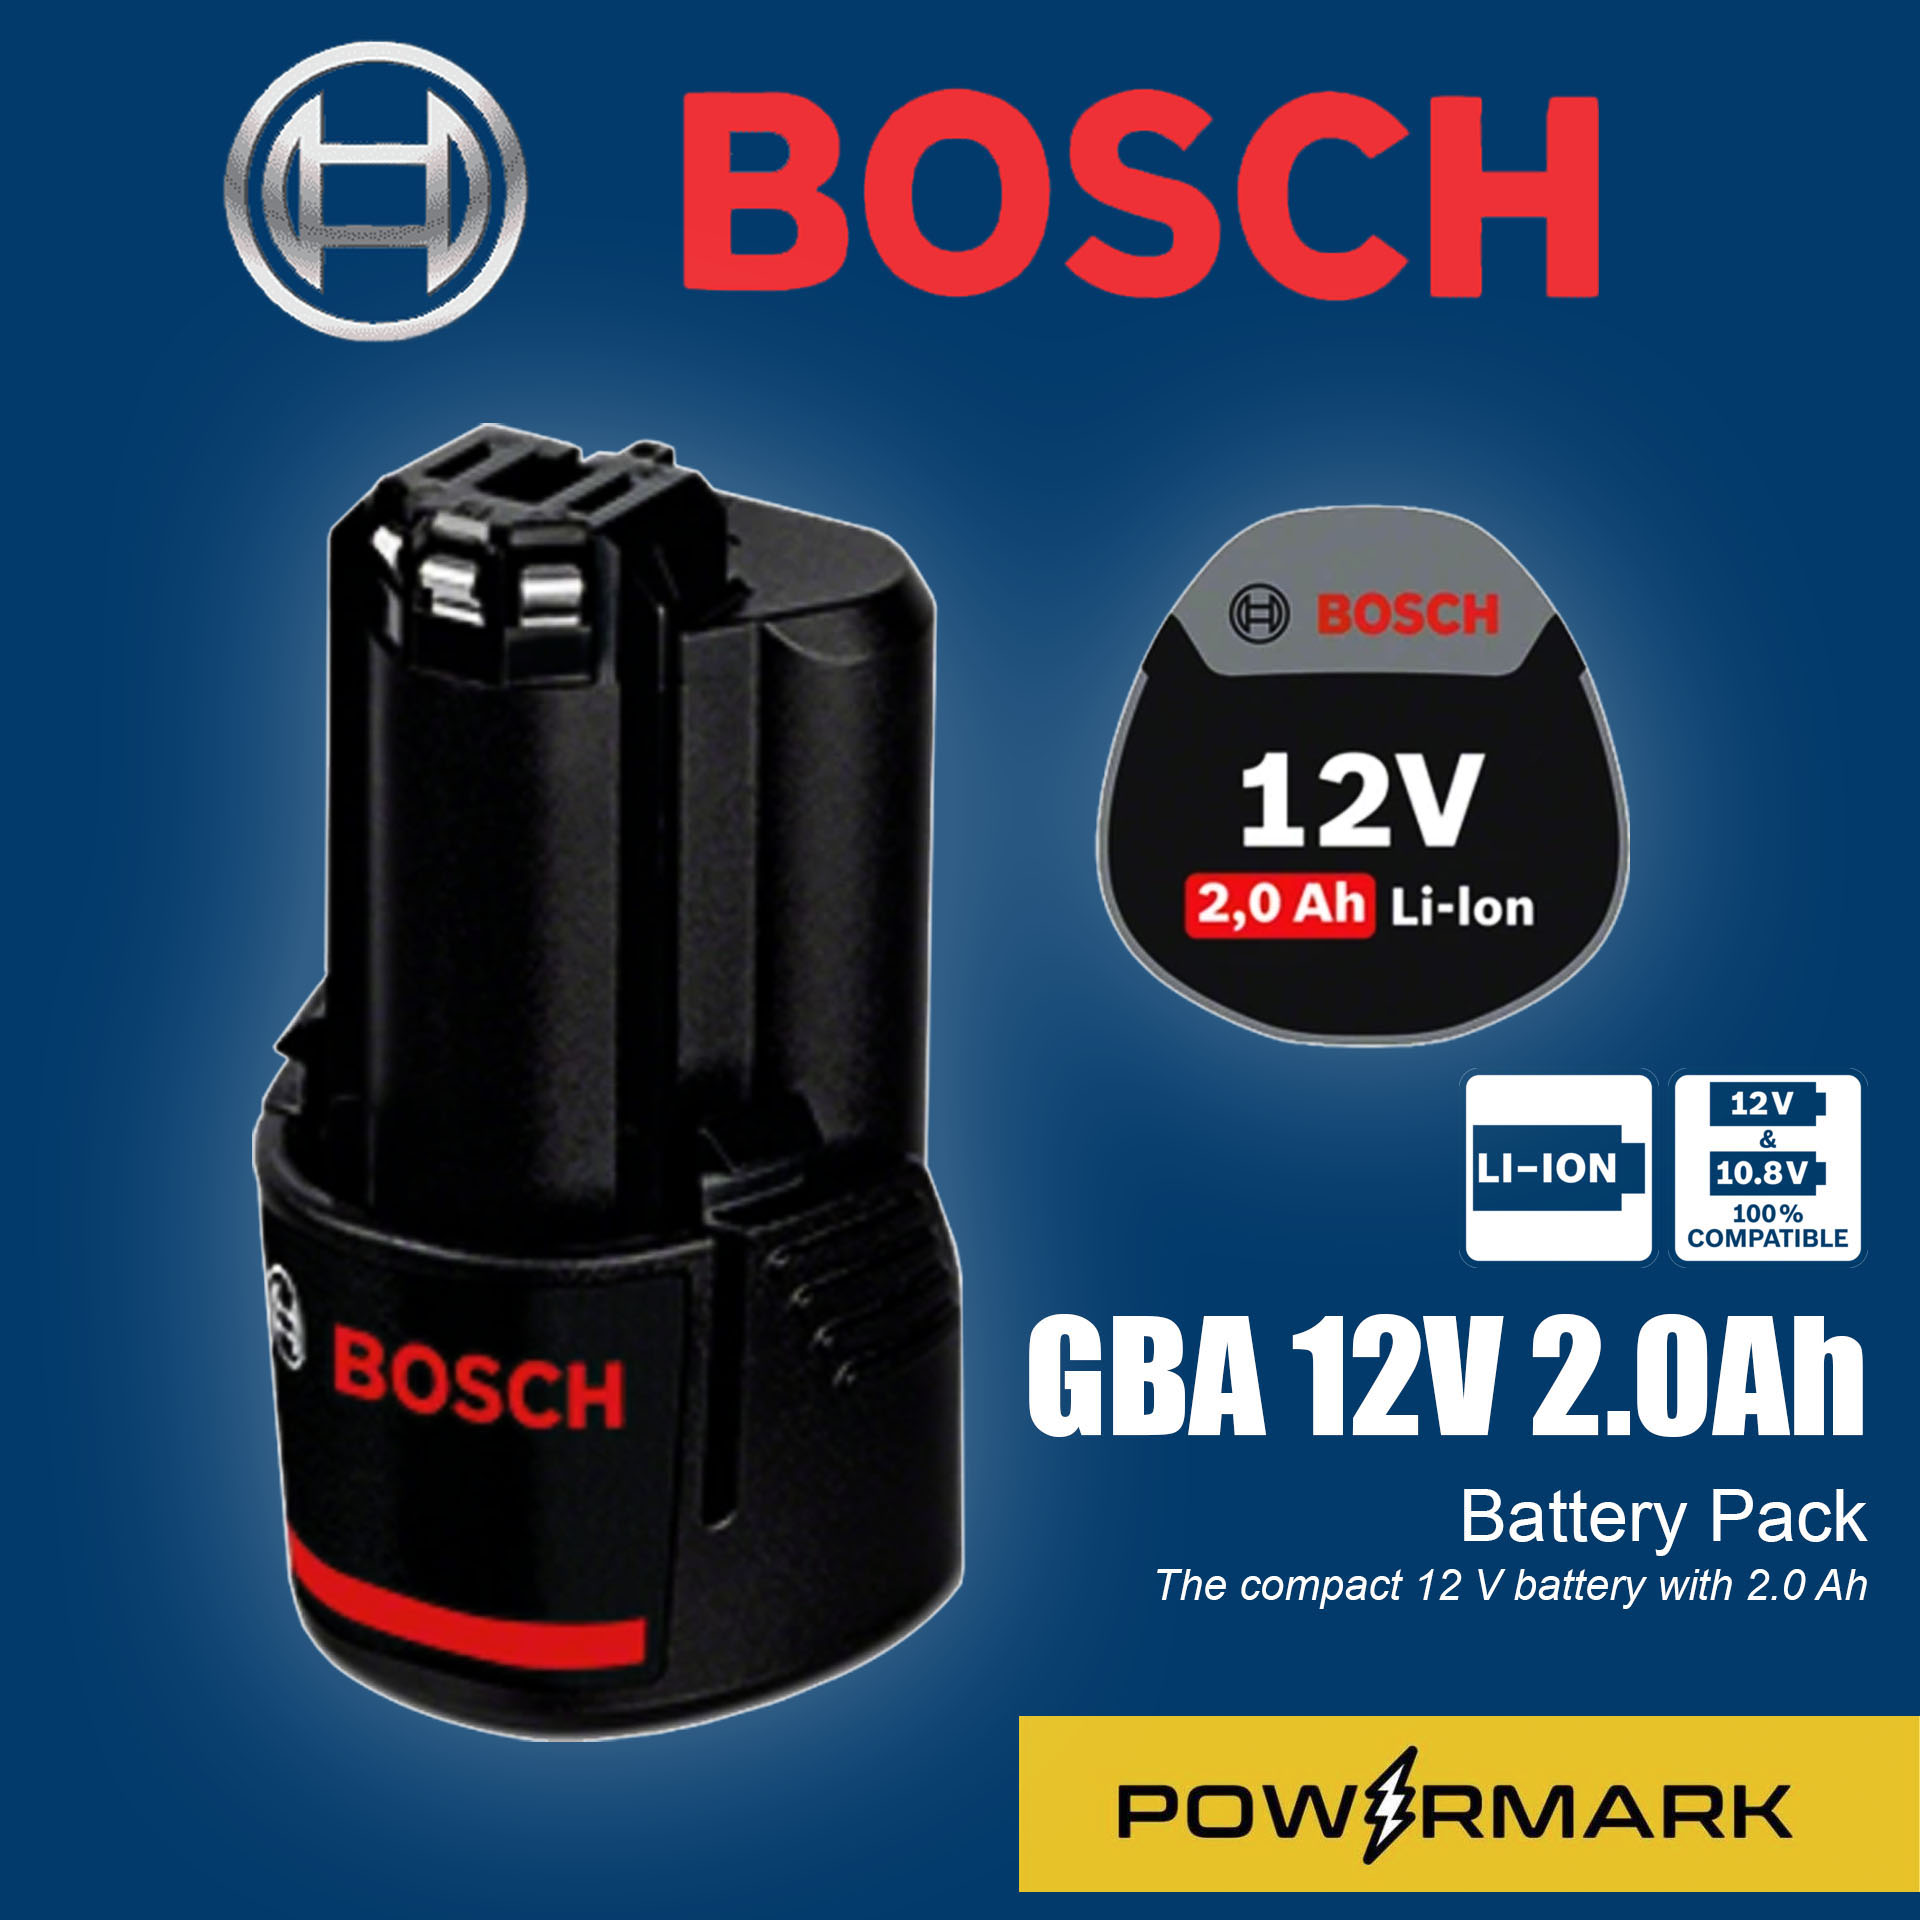 BOSCH GBA 12V 2.0Ah O-B Lithium Ion Battery Pack [POWERMARK